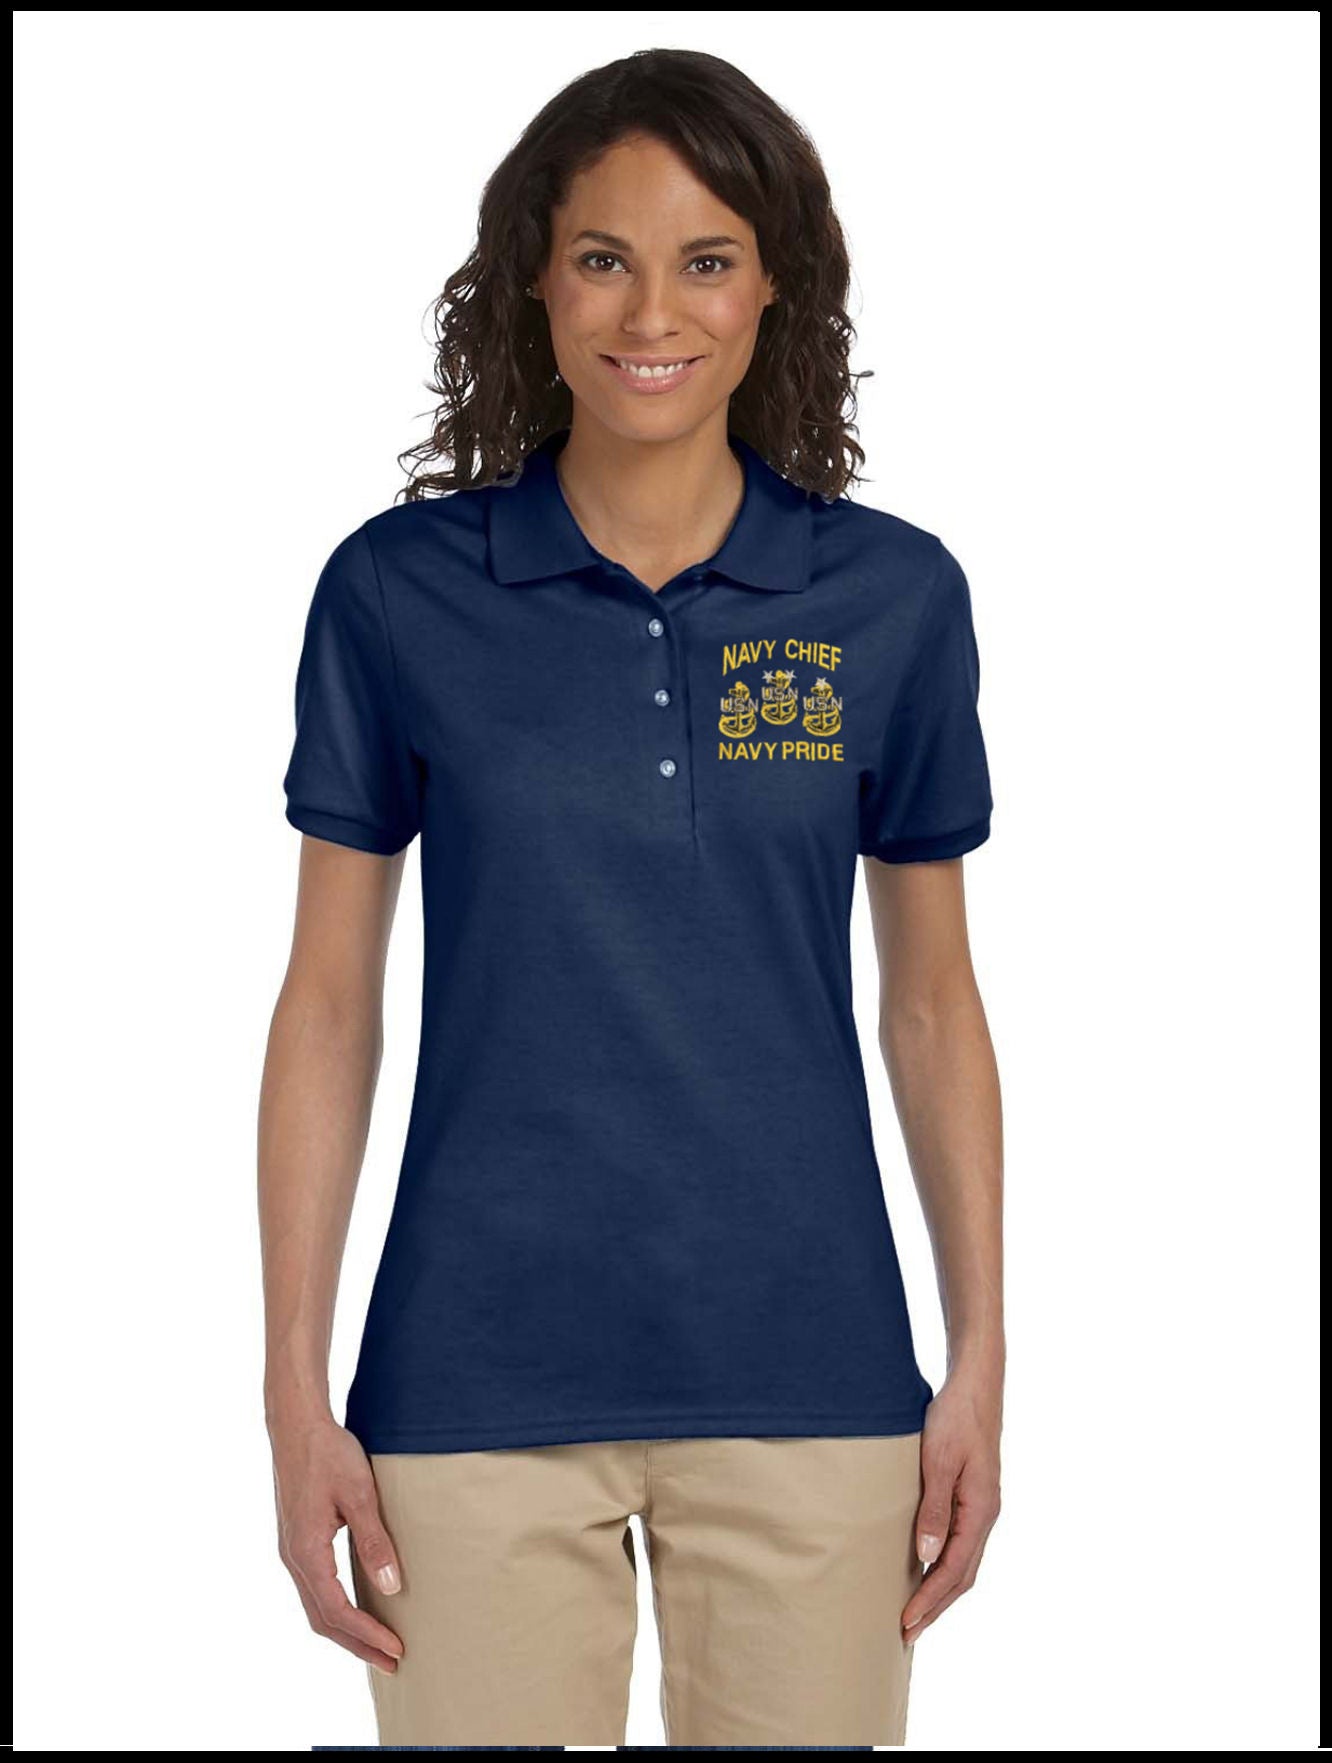 Ladies CPO Navy Chief, Navy Pride Navy Blue Polo Shirt 3 Anchors